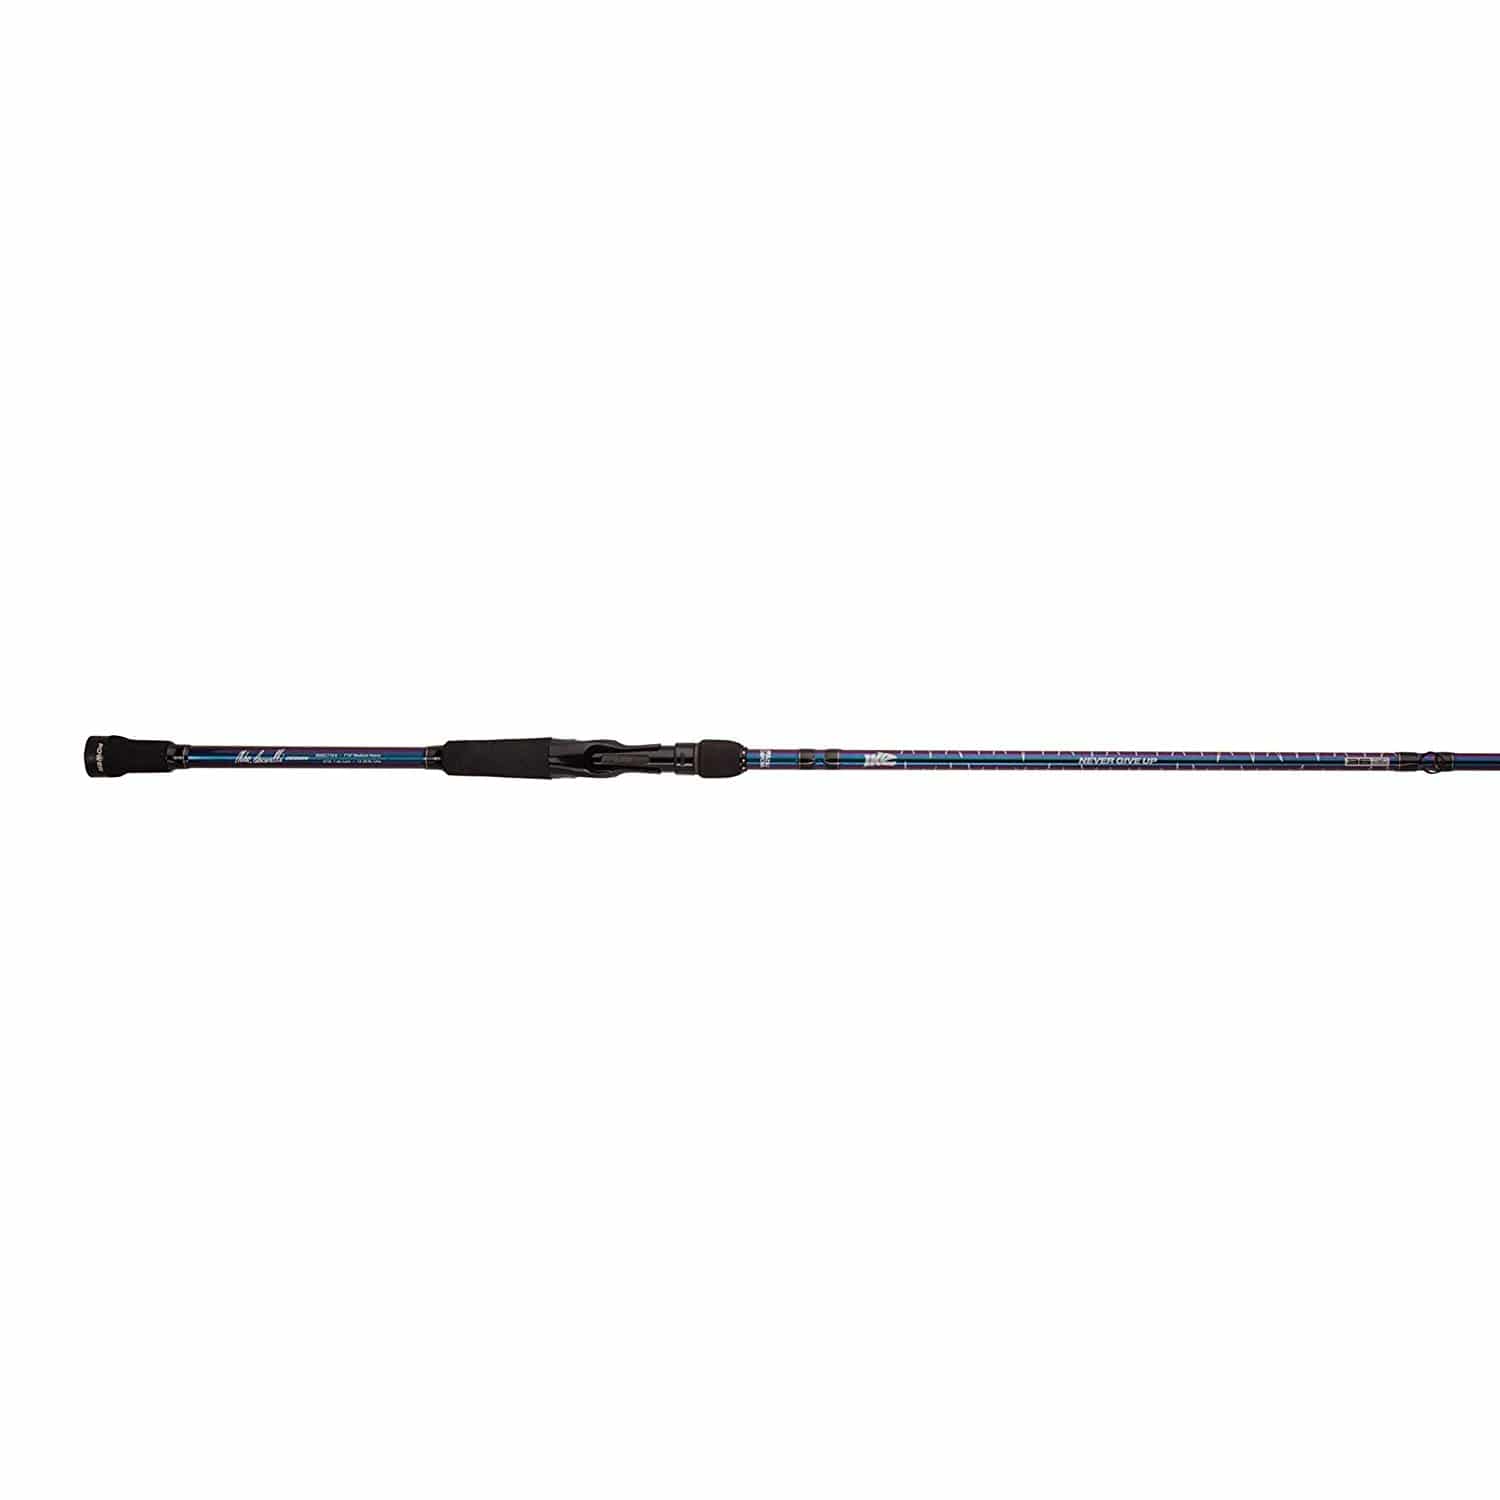 Abu Garcia IKE Signature Power Casting Fishing Rod